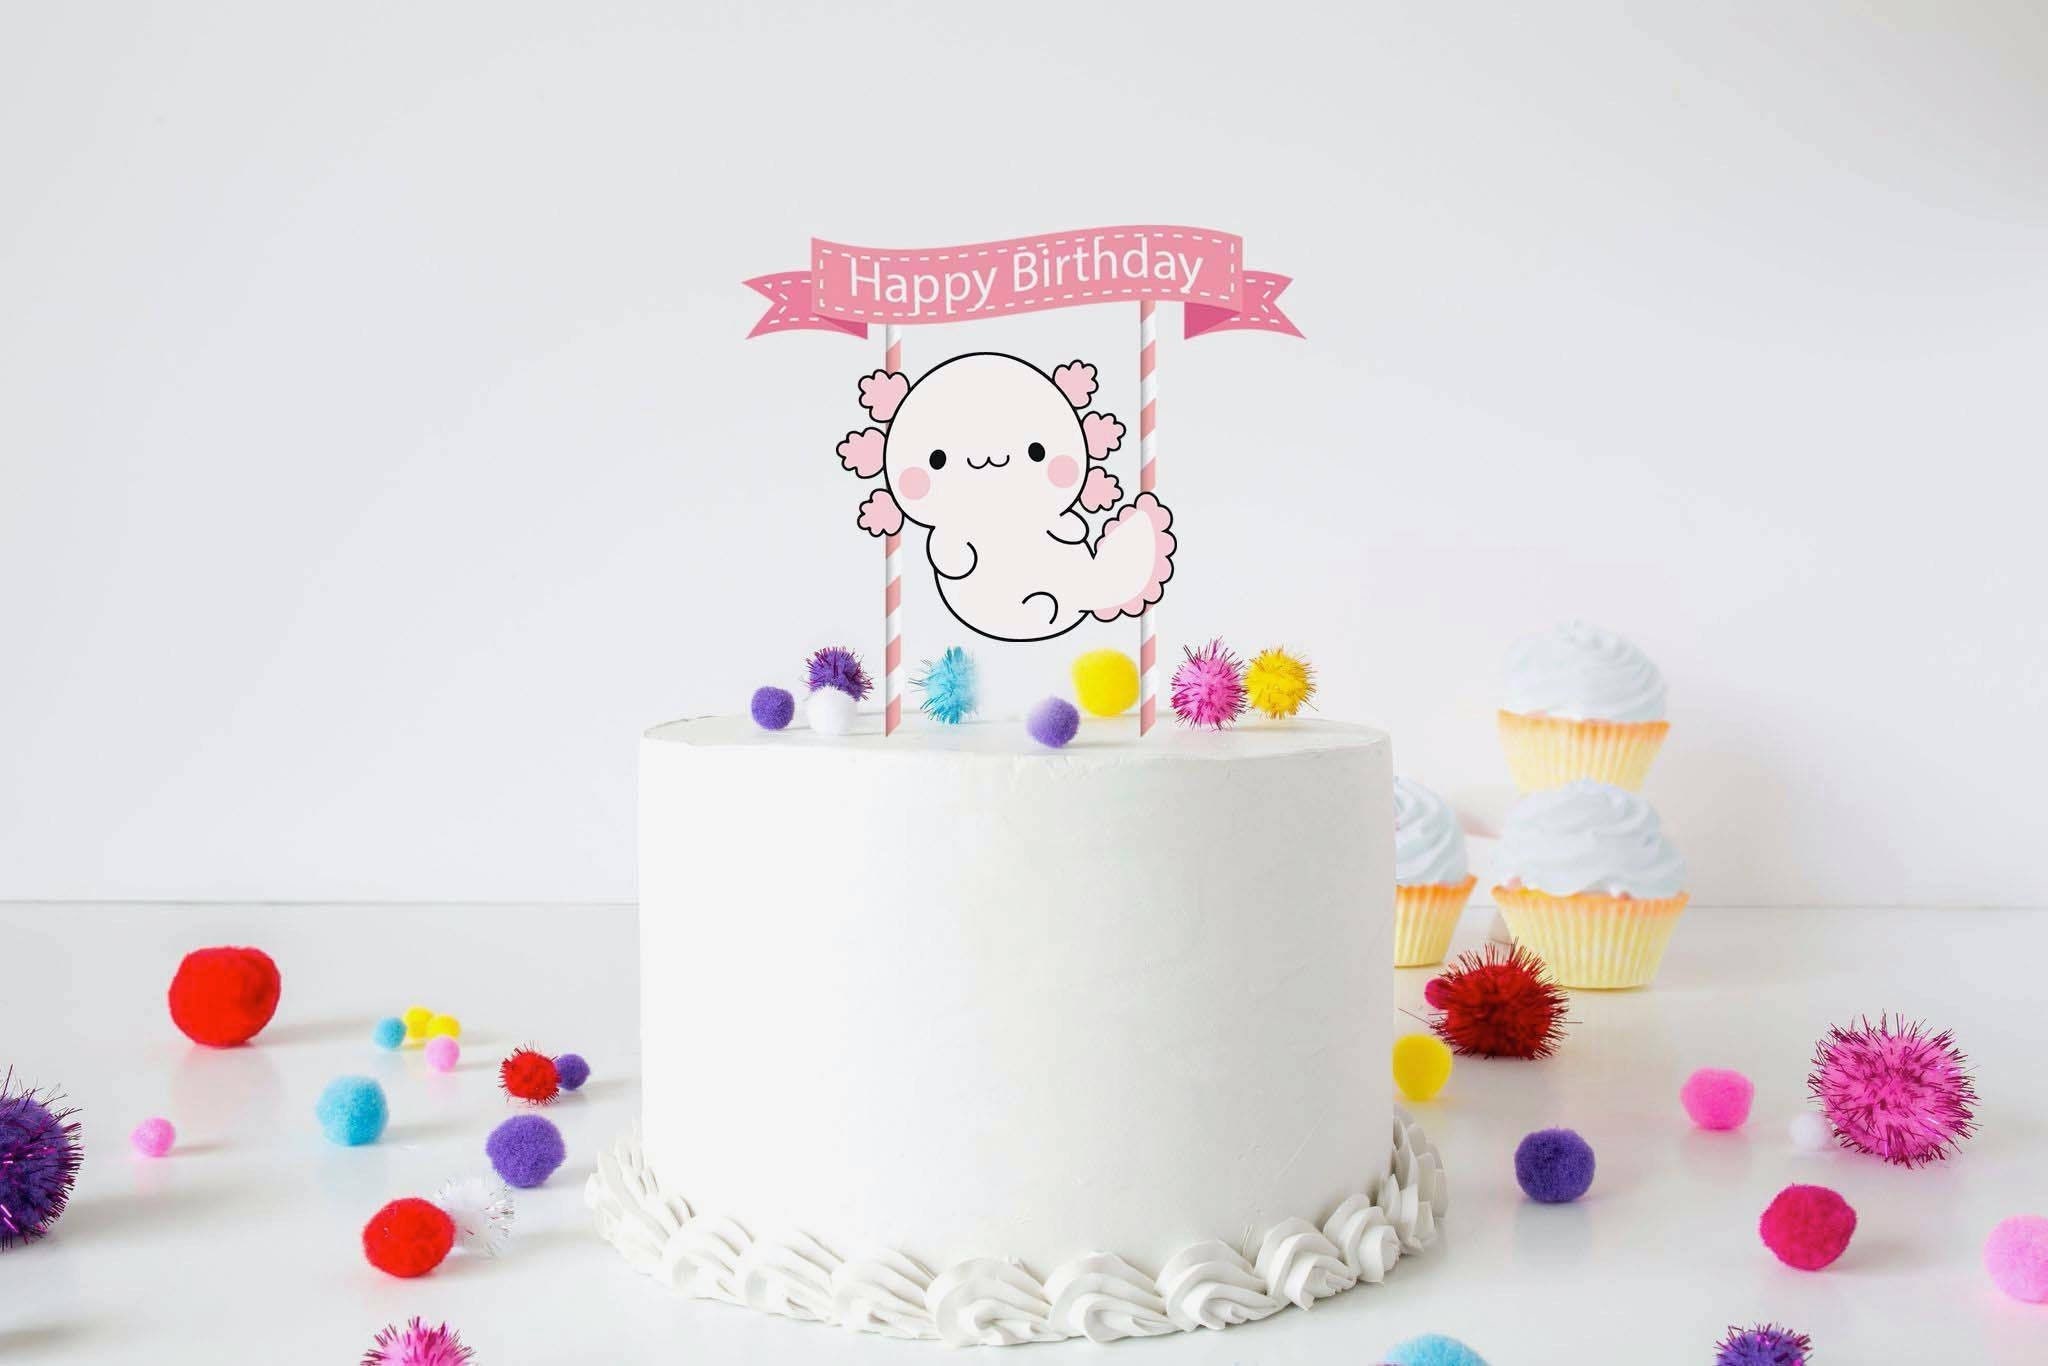 37 Pieces of Axolotl Cake Topper,Axolotl Themed Party Supplies Cupcakes  Kids BirthdayDecorations,Cute Cartoon Axolotl Cake Decorations for Axolotl